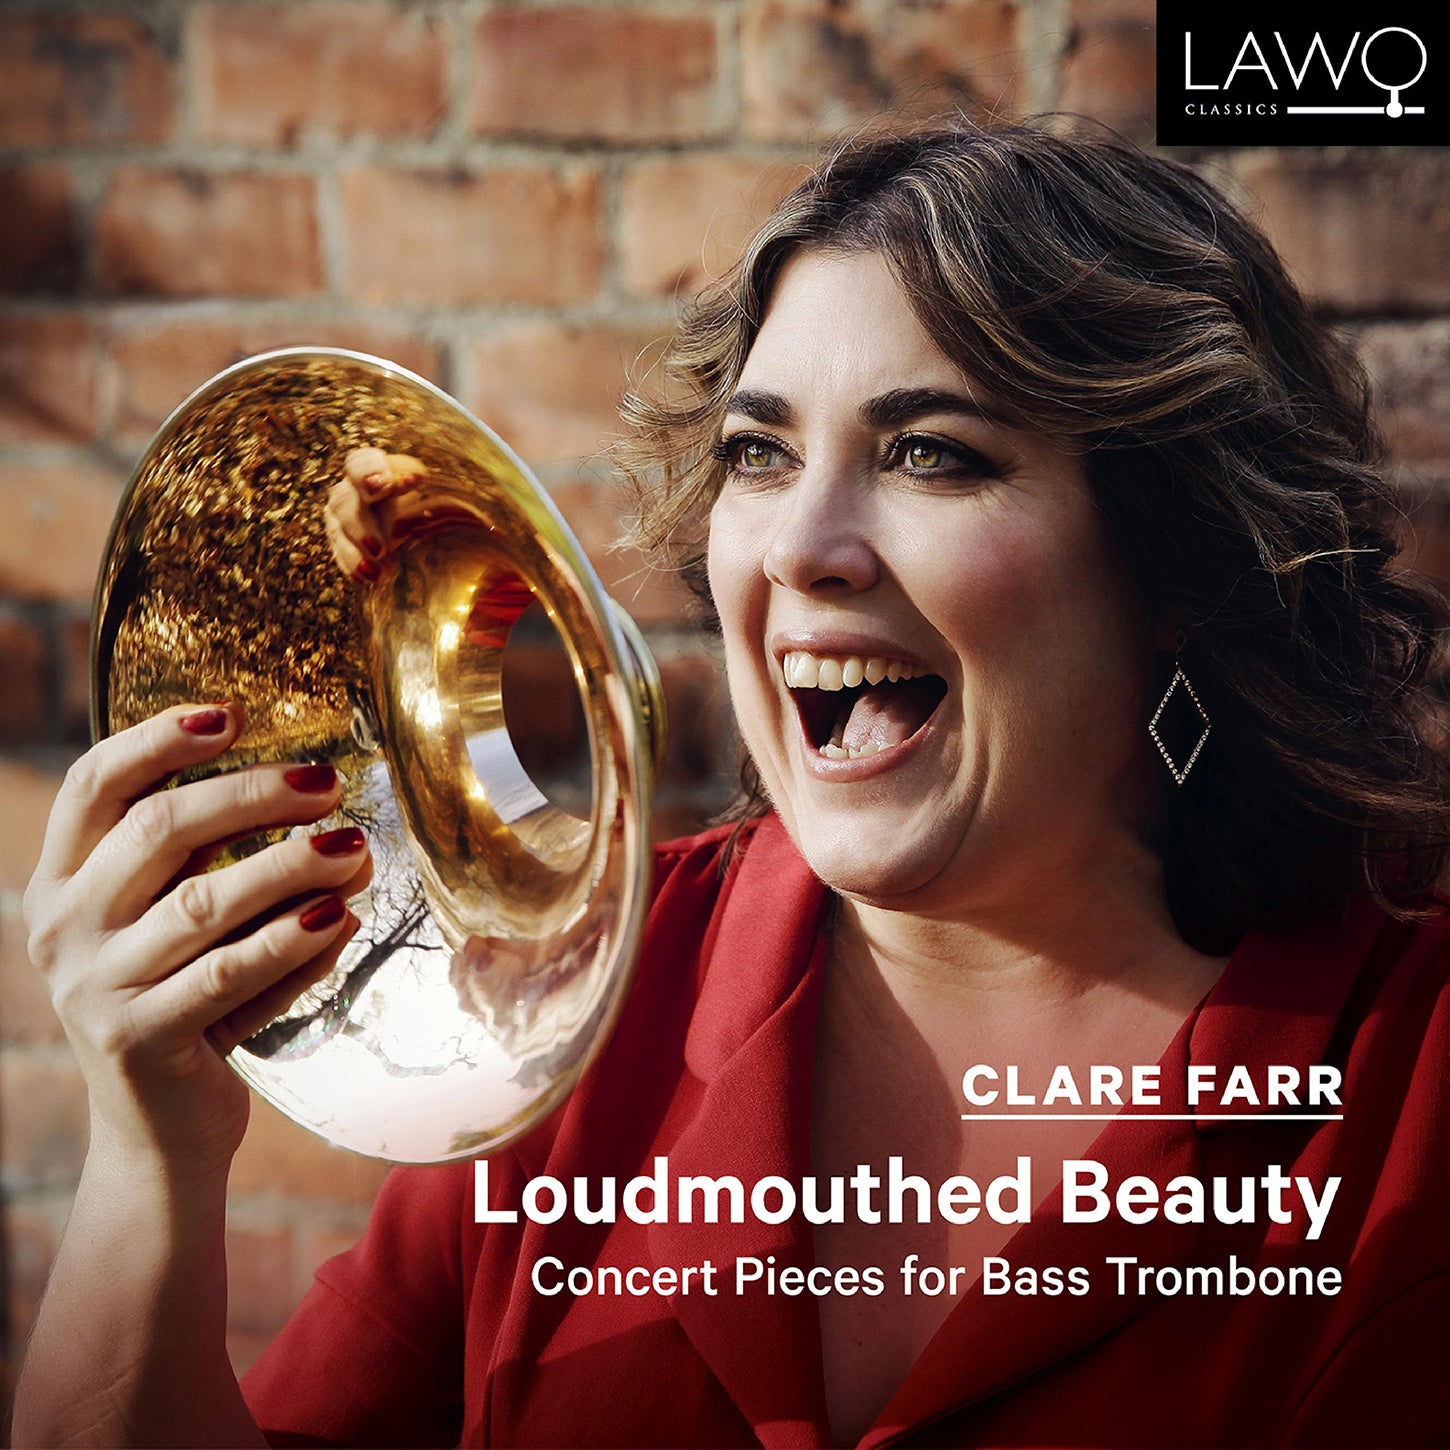 Tomasi, Sachse et al: Loudmouthed Beauty - Concert Pieces for Bass Trombone / Farr